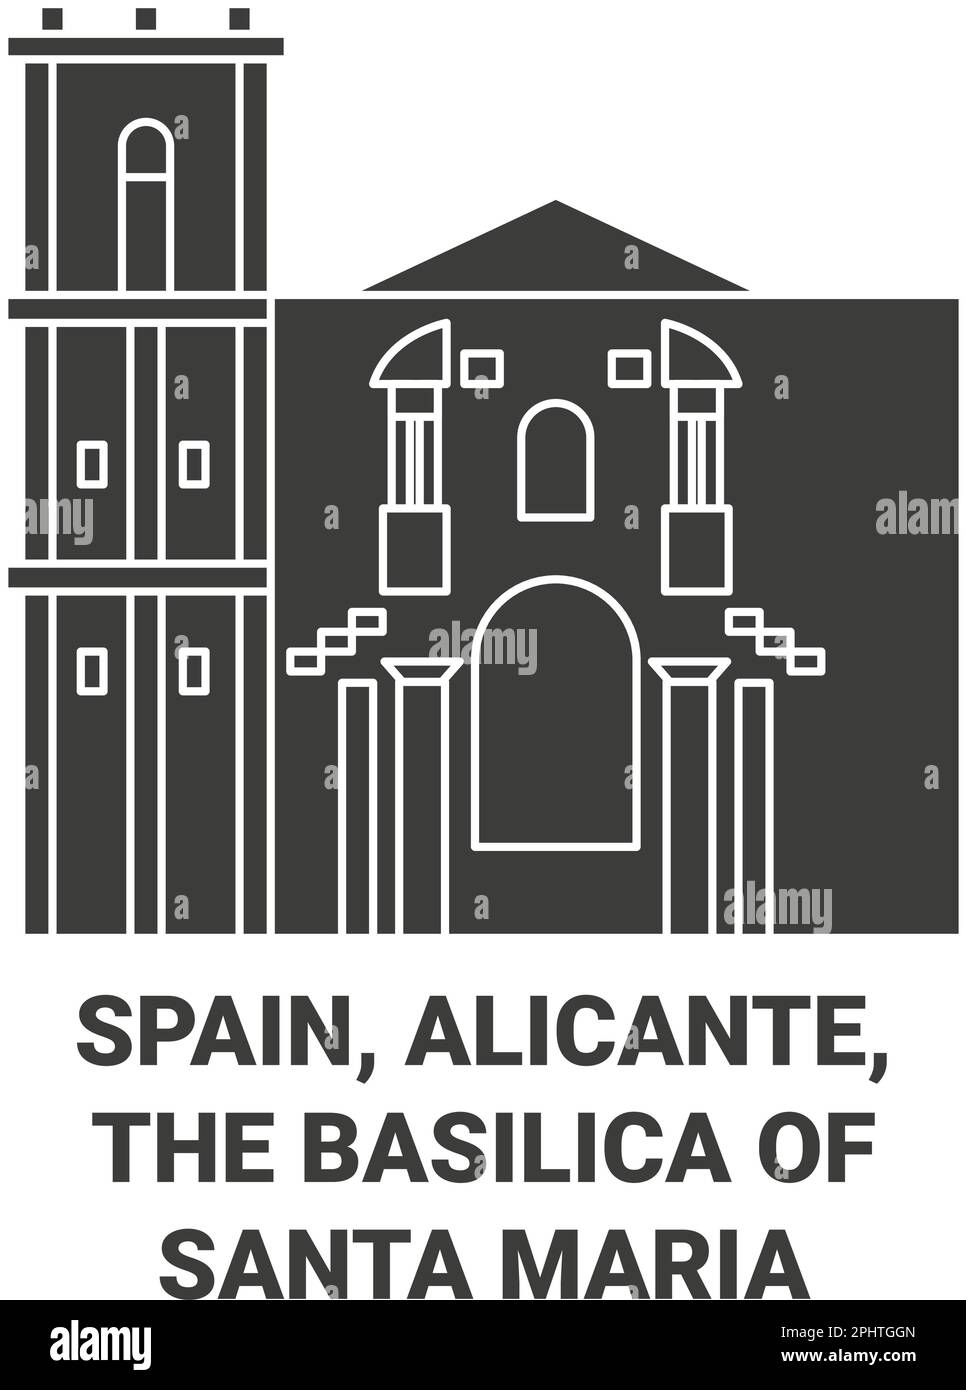 Espagne, Alicante, la Basilique de Santa Maria Voyage illustration vecteur Illustration de Vecteur